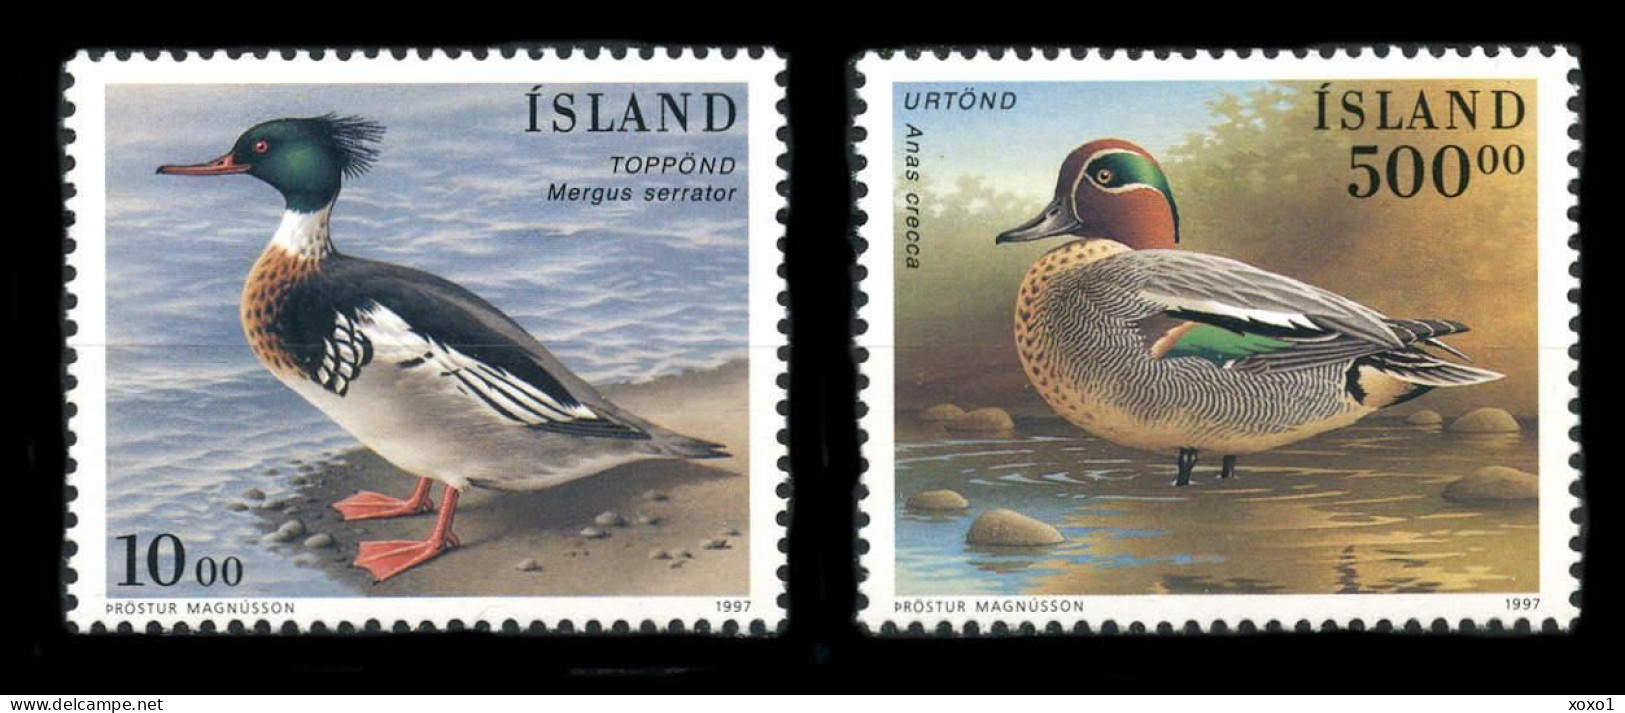 Iceland 1997 MiNr. 862 - 863 Island Birds IX  Red-breasted Merganser, Eurasian Teal 2v  MNH** 15.00 € - Eenden